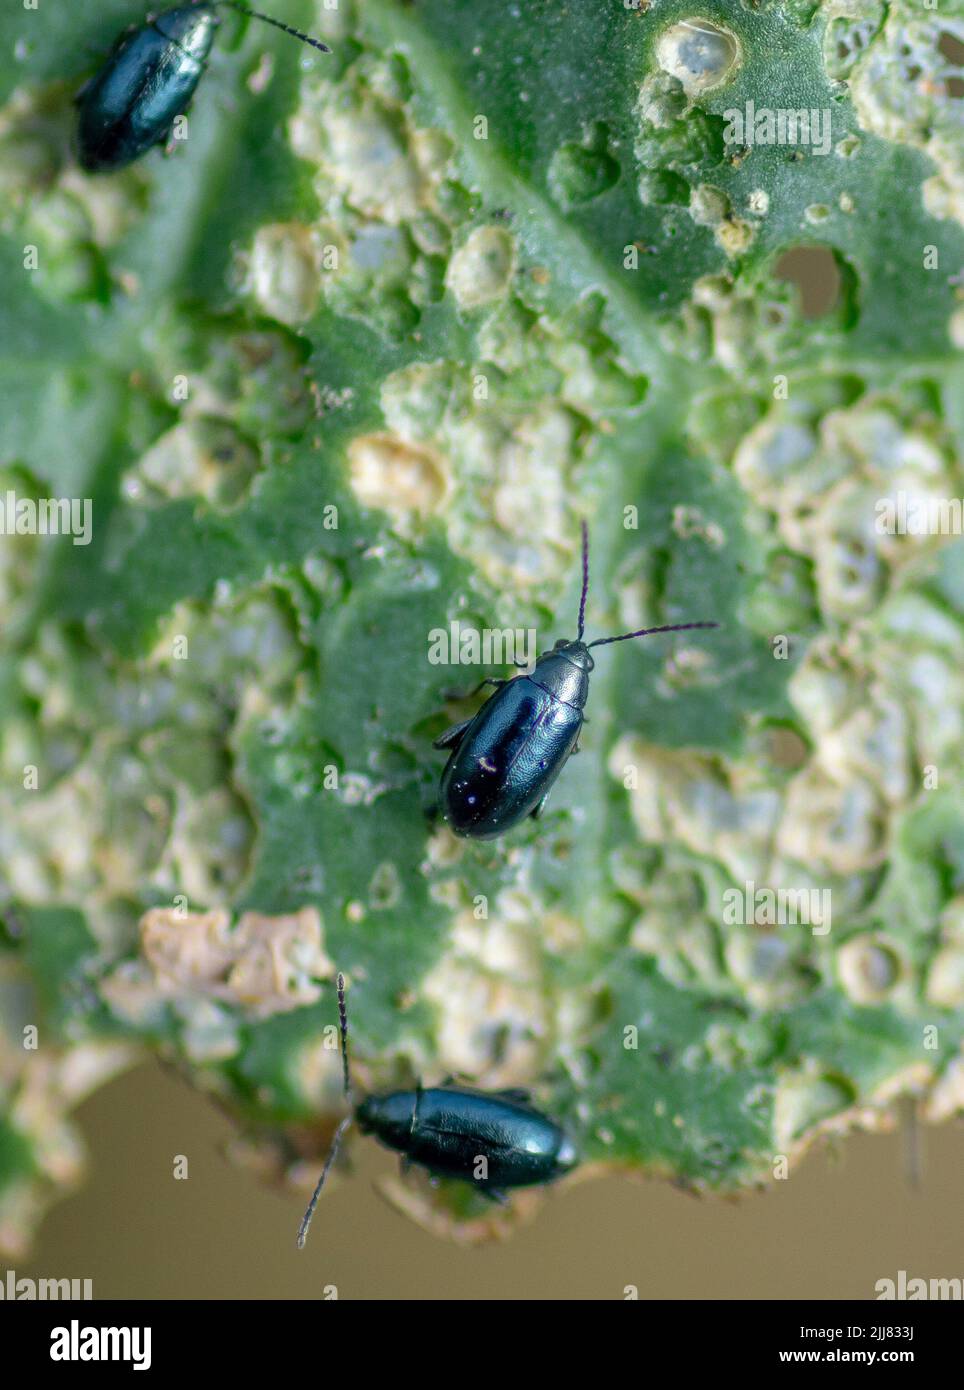 Cabbage flea beetle (Phyllotreta cruciferae) or crucifer flea beetle. Damaged leaves of cabbage in the vegetable garden. Stock Photo